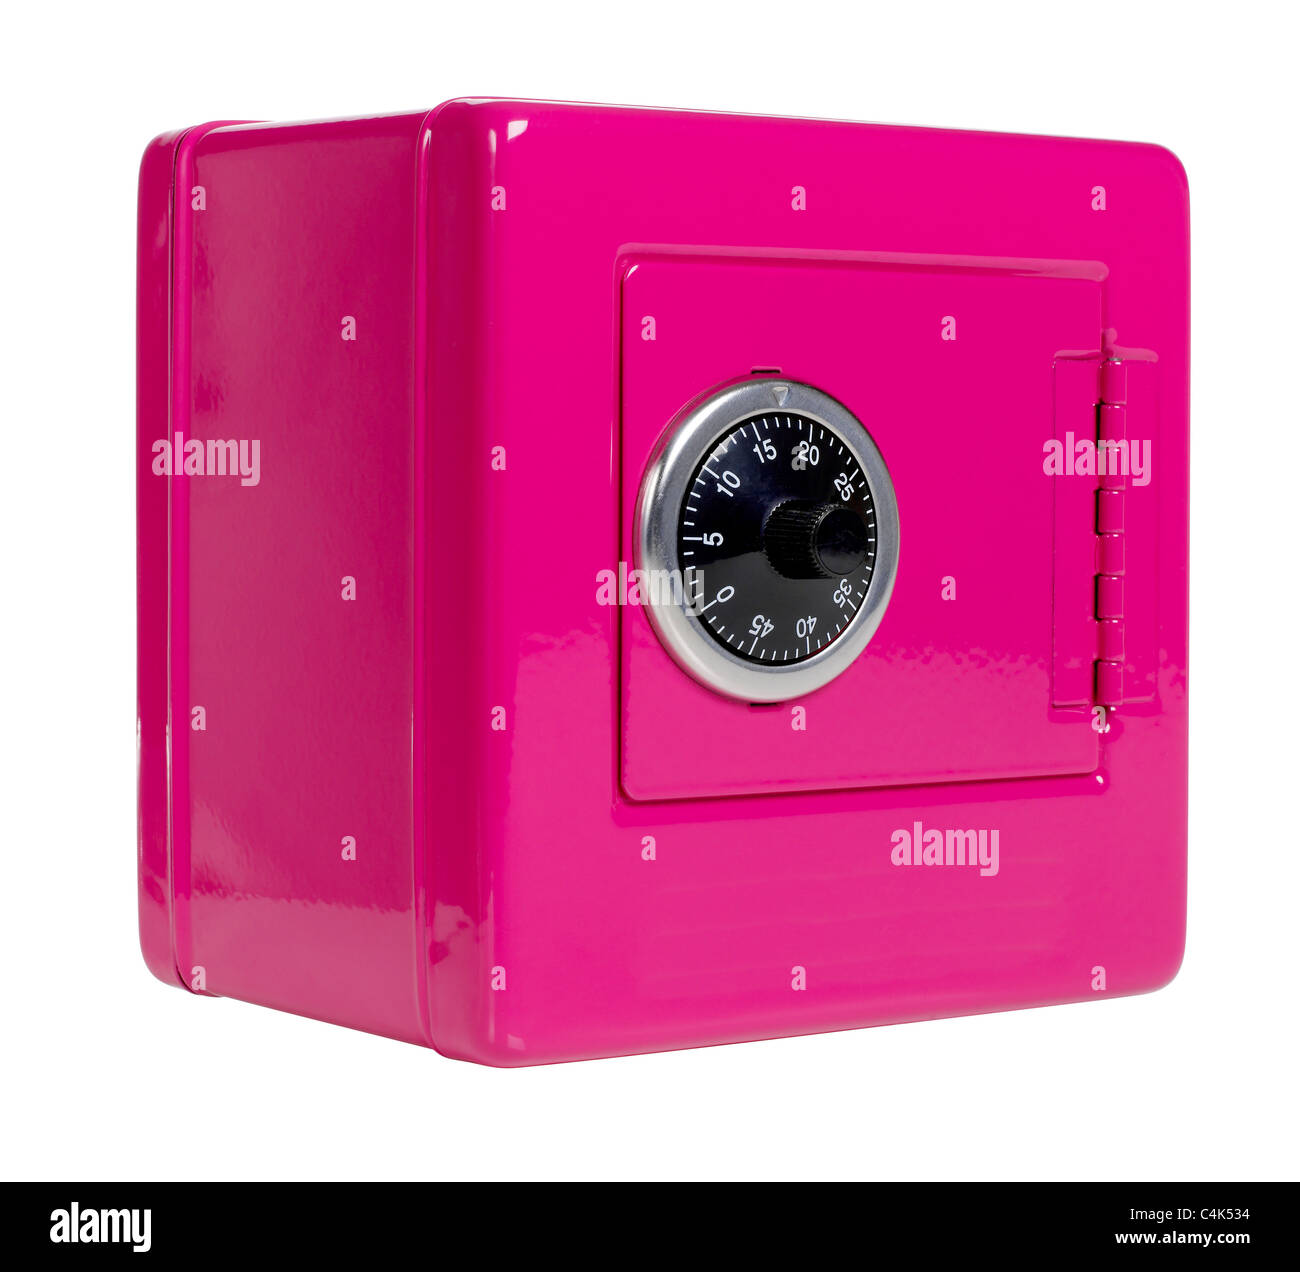 Salvadanaio cassaforte rosa Foto stock - Alamy